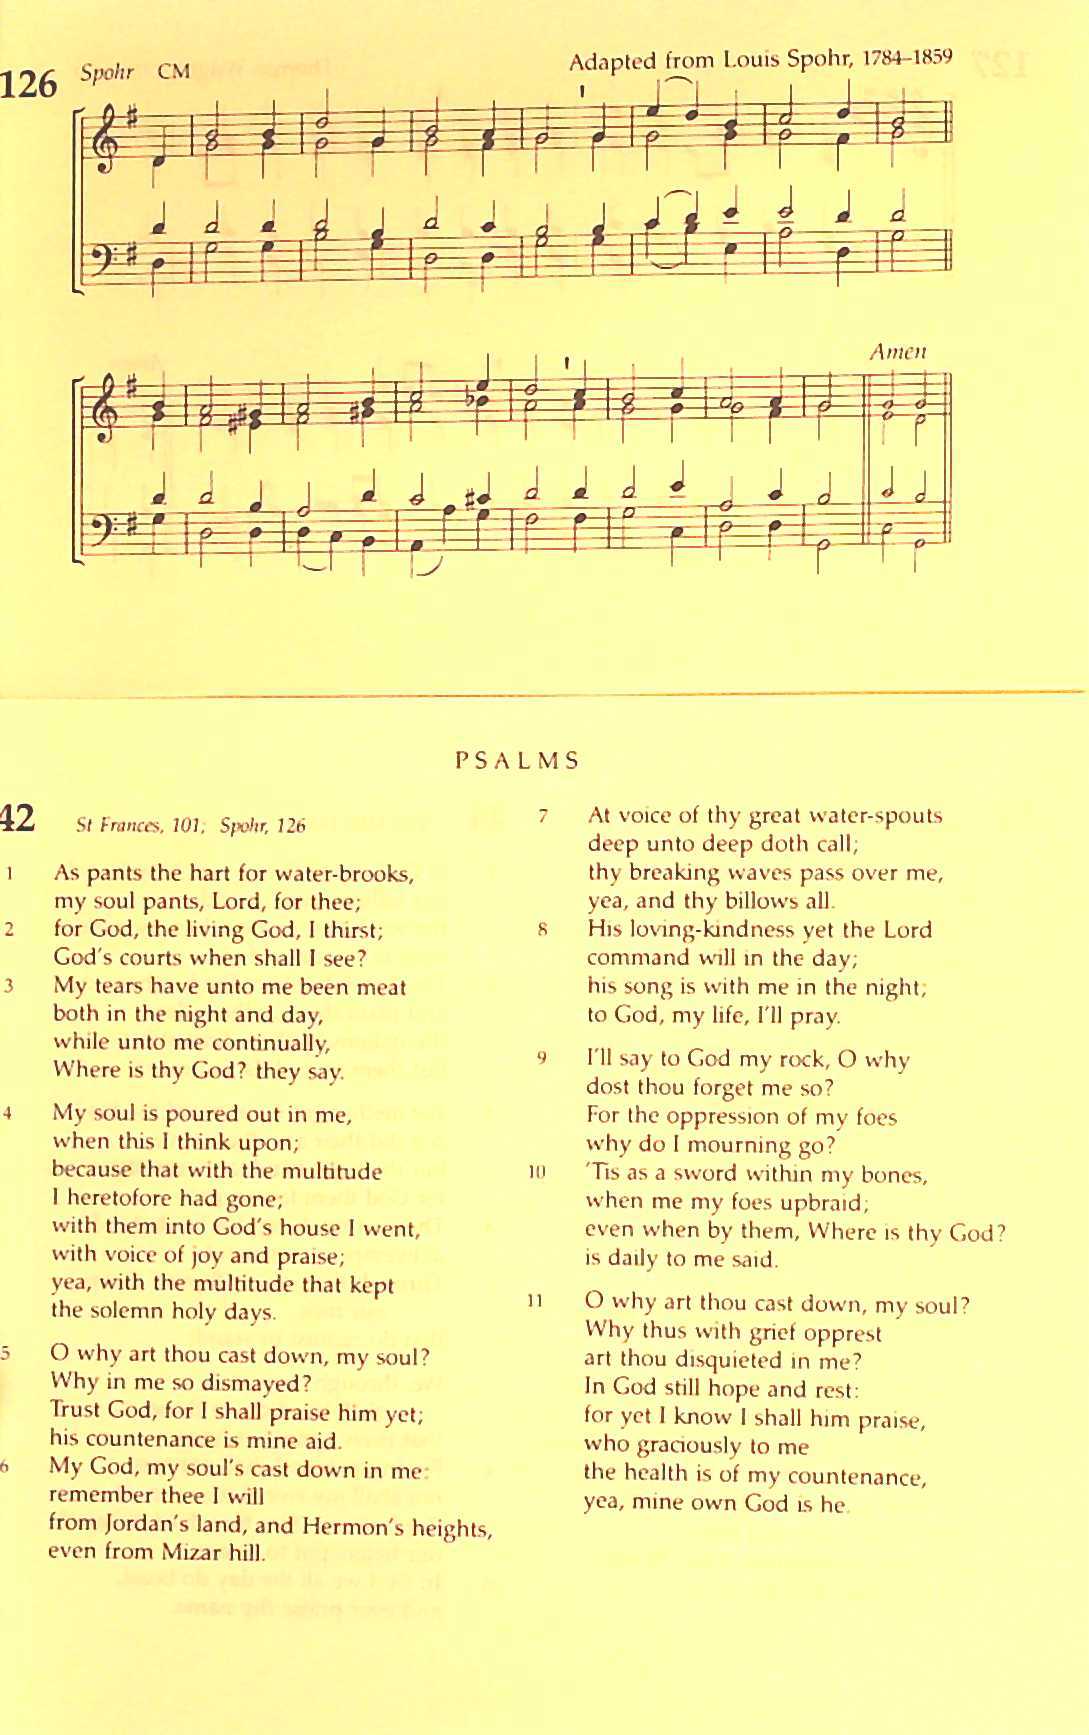 The Irish Presbyterian Hymbook page 157